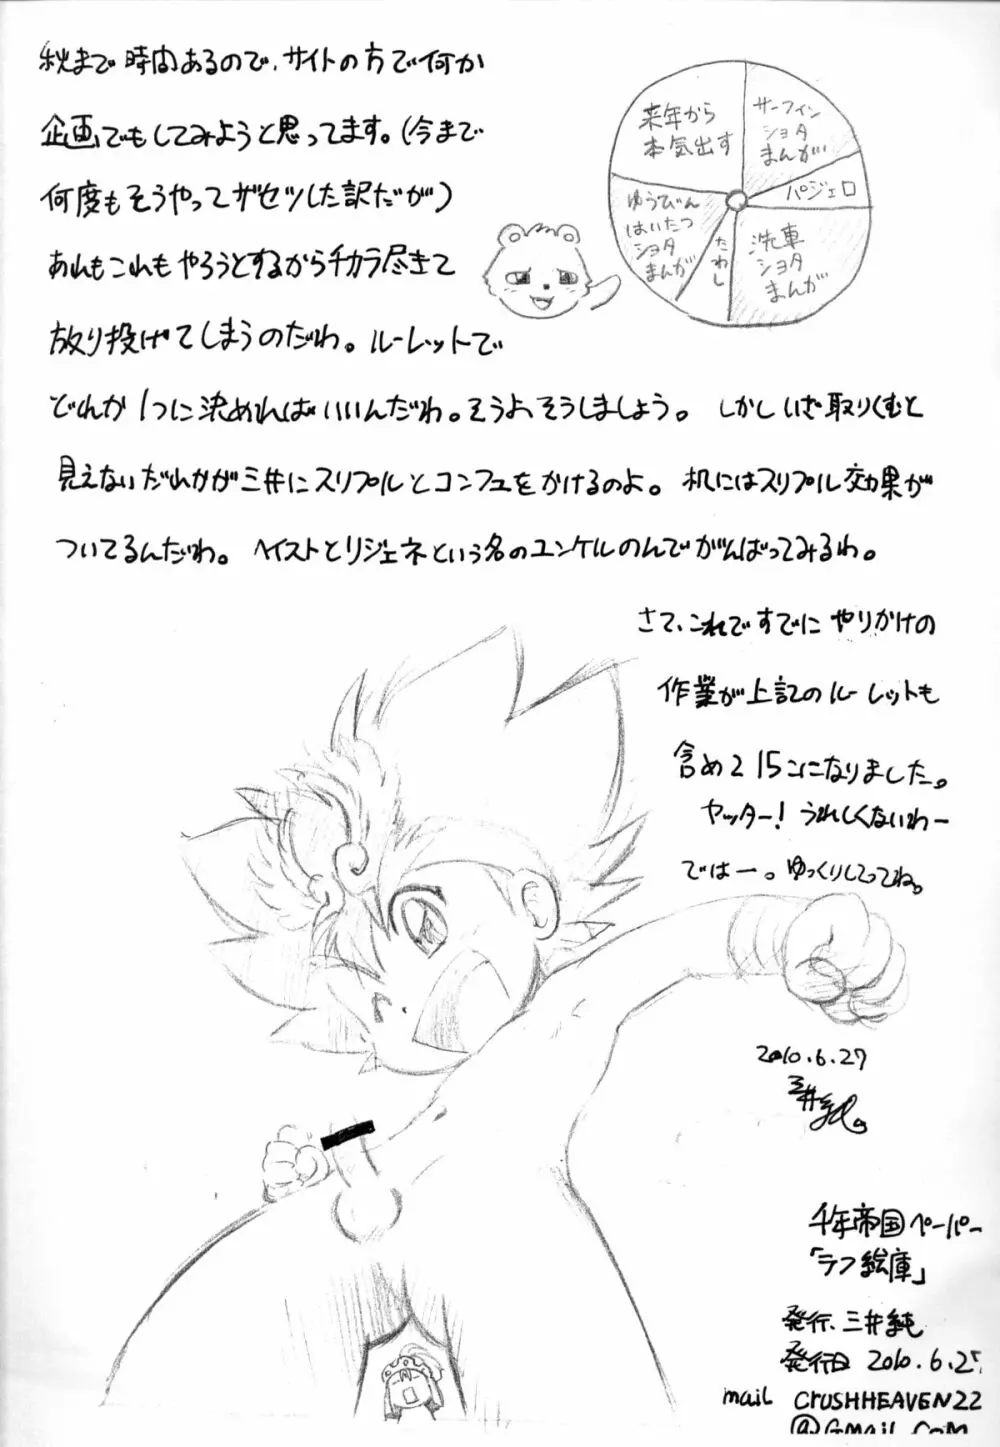 Mitsui Jun - Fucking Papa (Extra Volume) Konshuu no Umakamon & Rough Sketch Paper Page.8